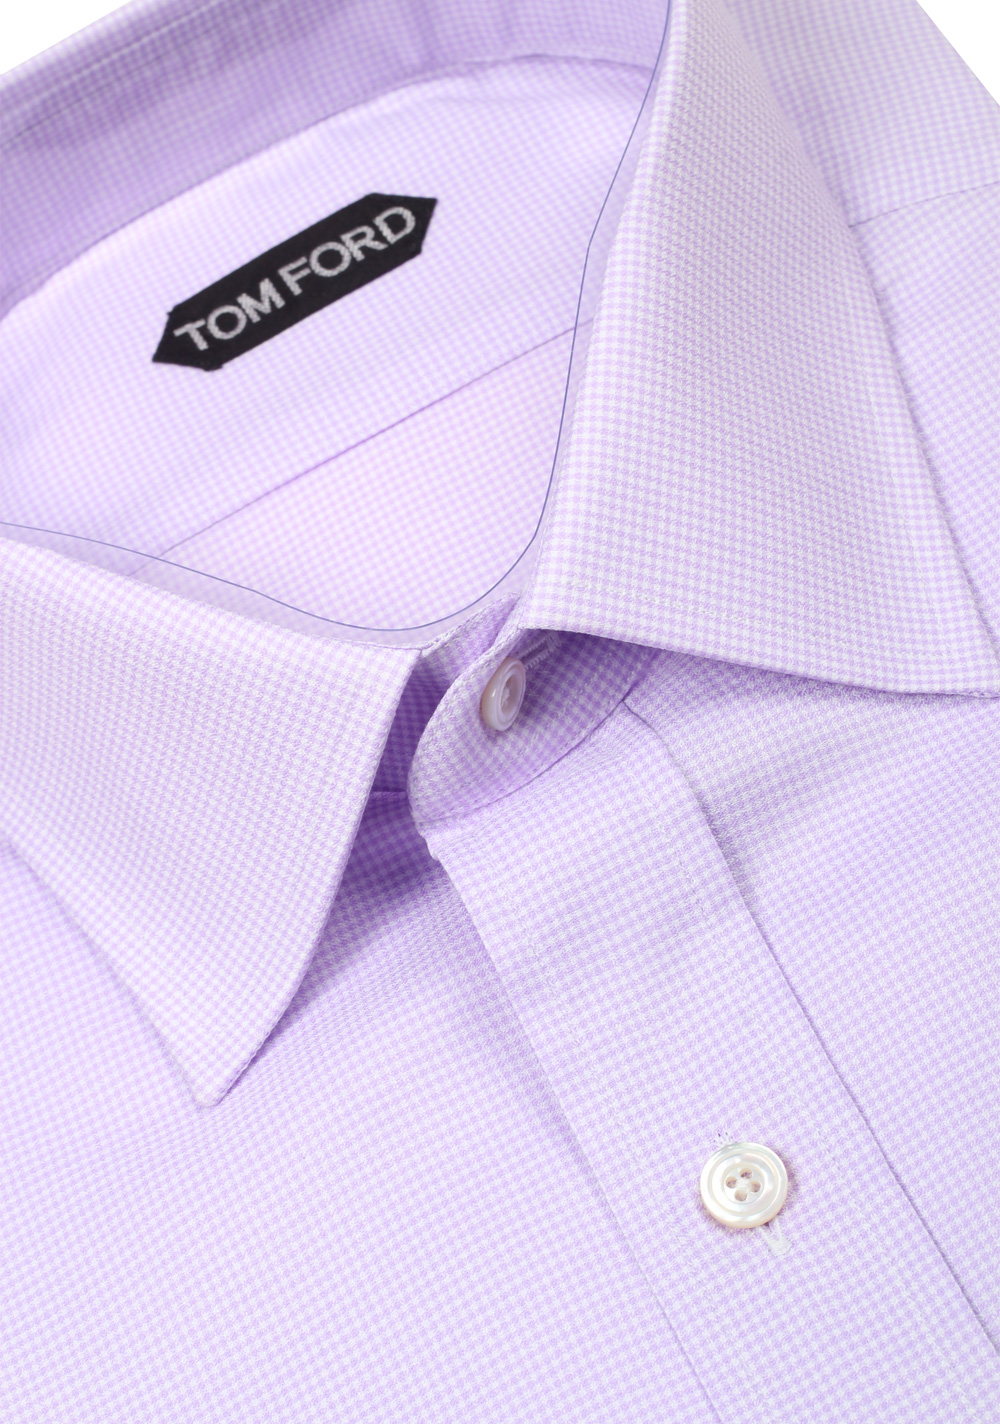 TOM FORD Patterned Lilac Dress Shirt Size 44 / 17,5 U.S. | Costume Limité